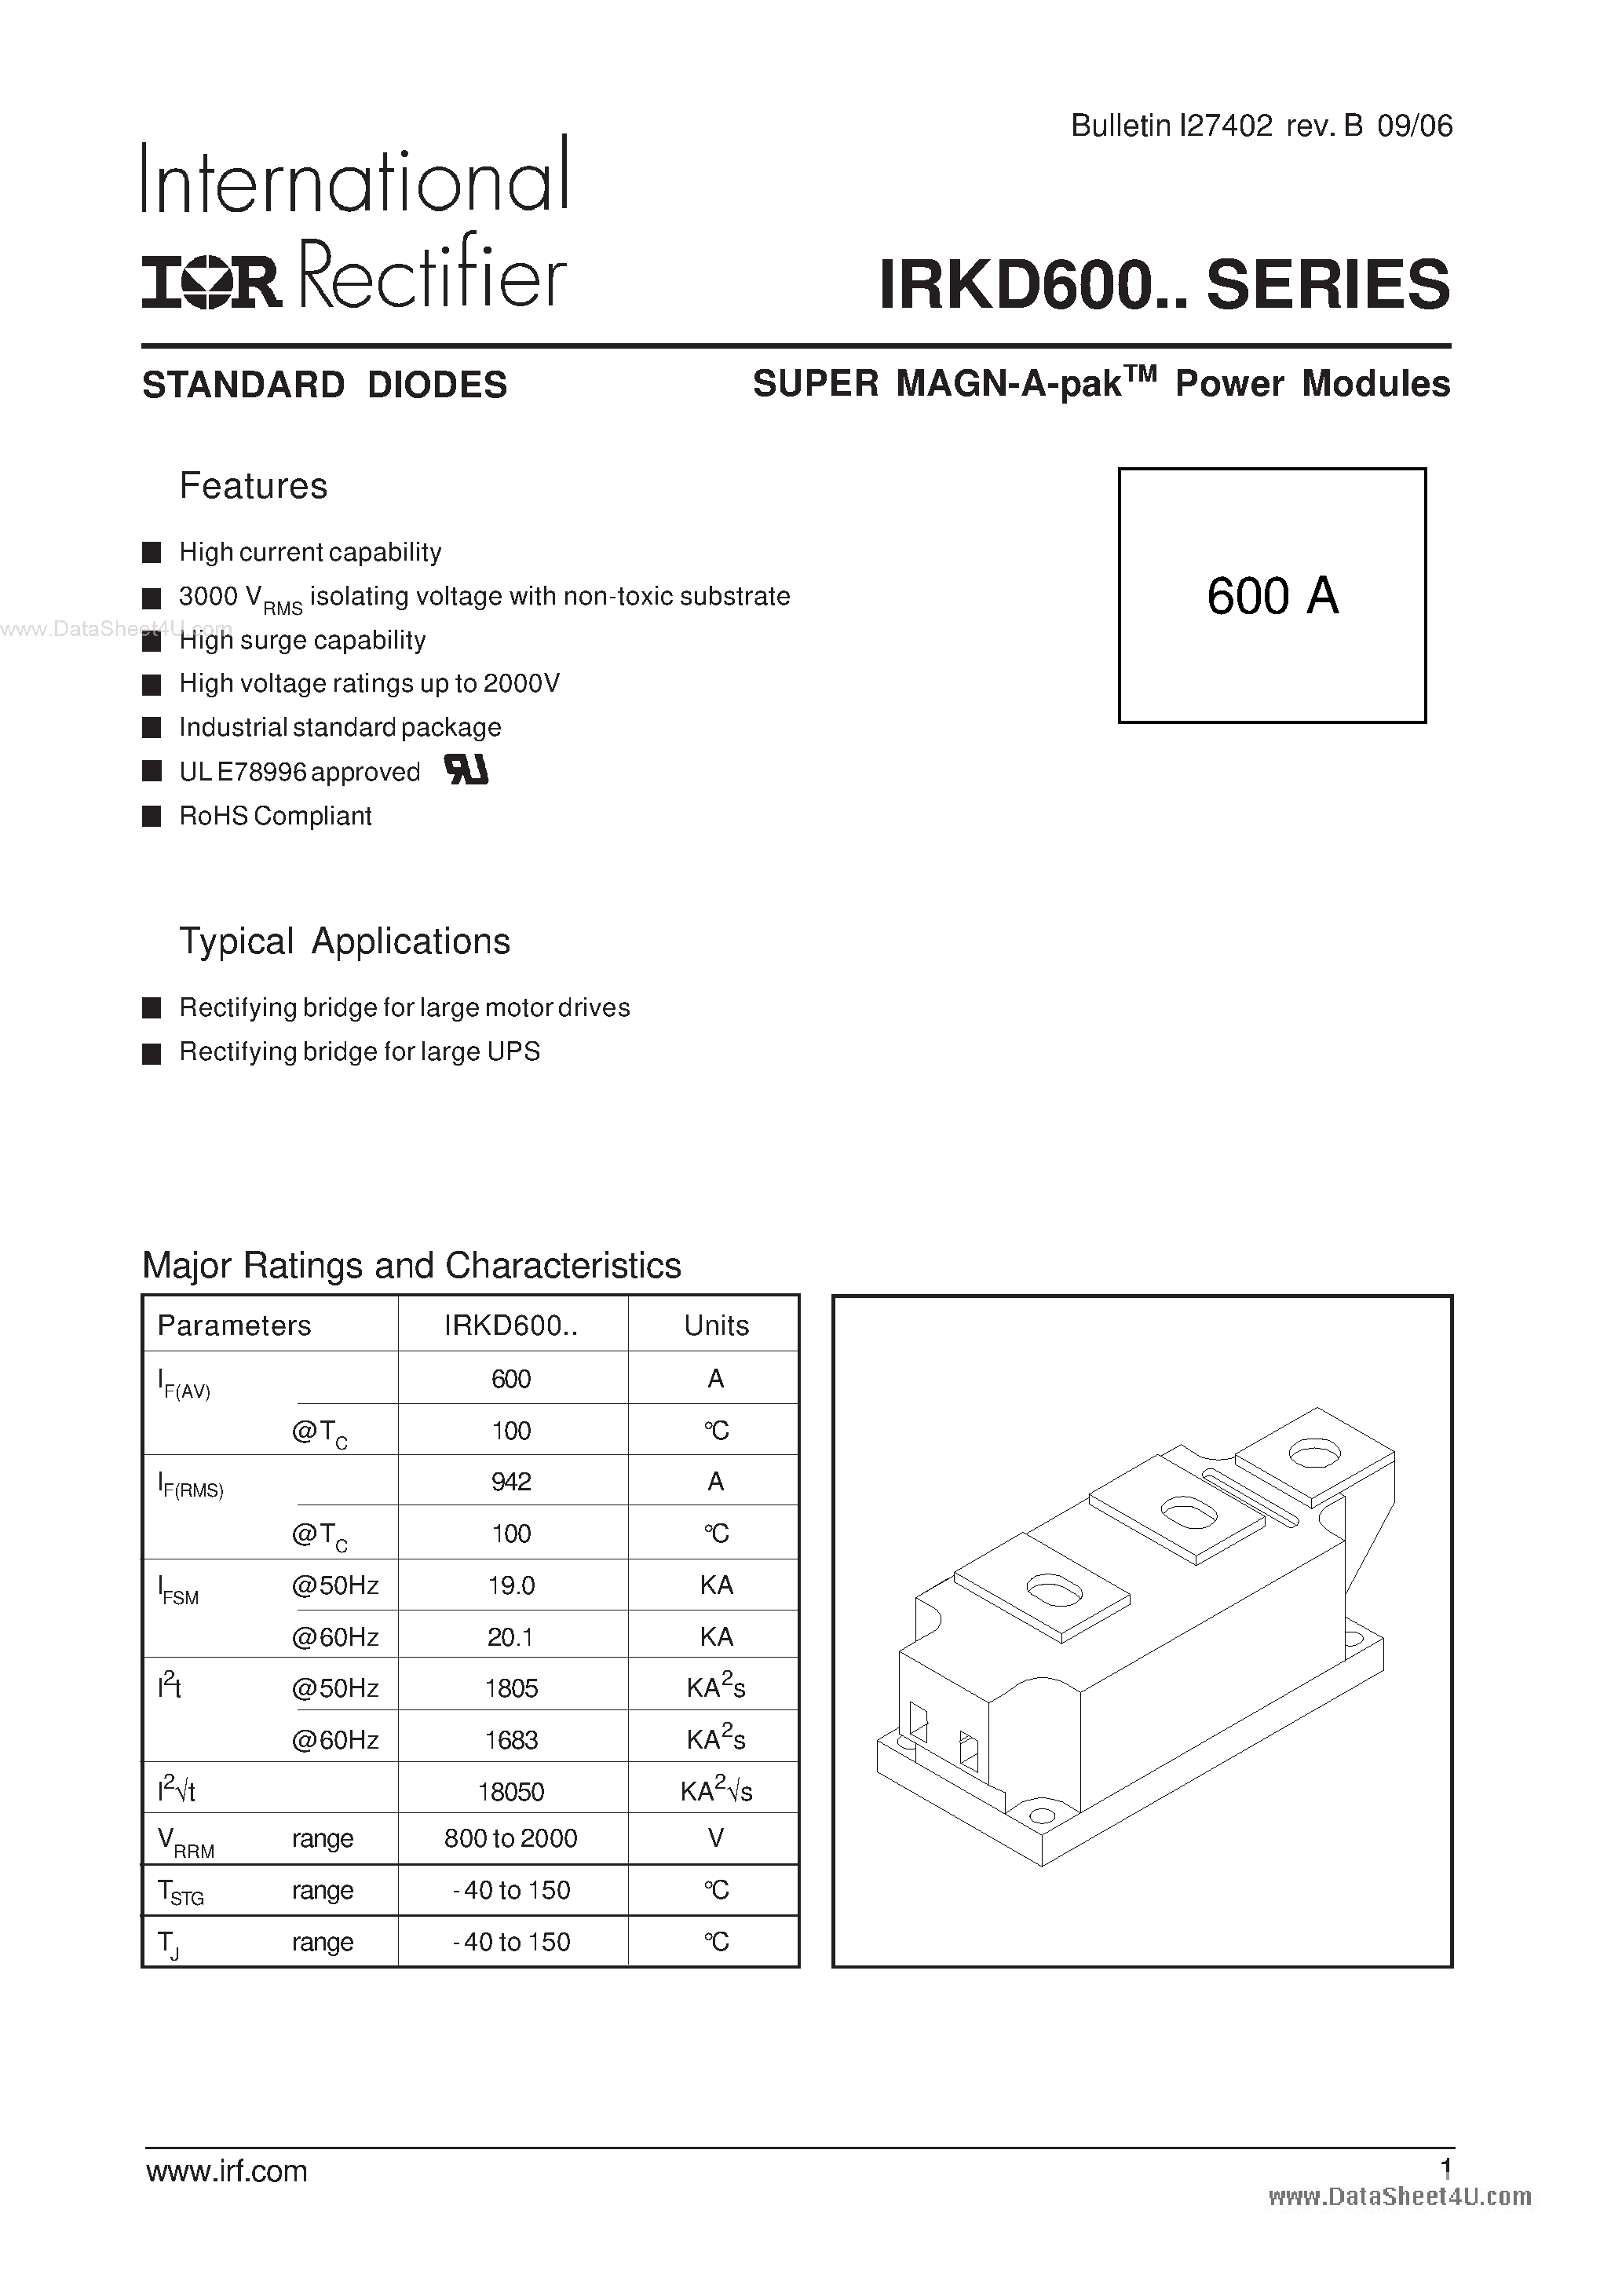 Datasheet IRKD600 - STANDARD DIODES SUPER MAGM-A-part Power Modules page 1